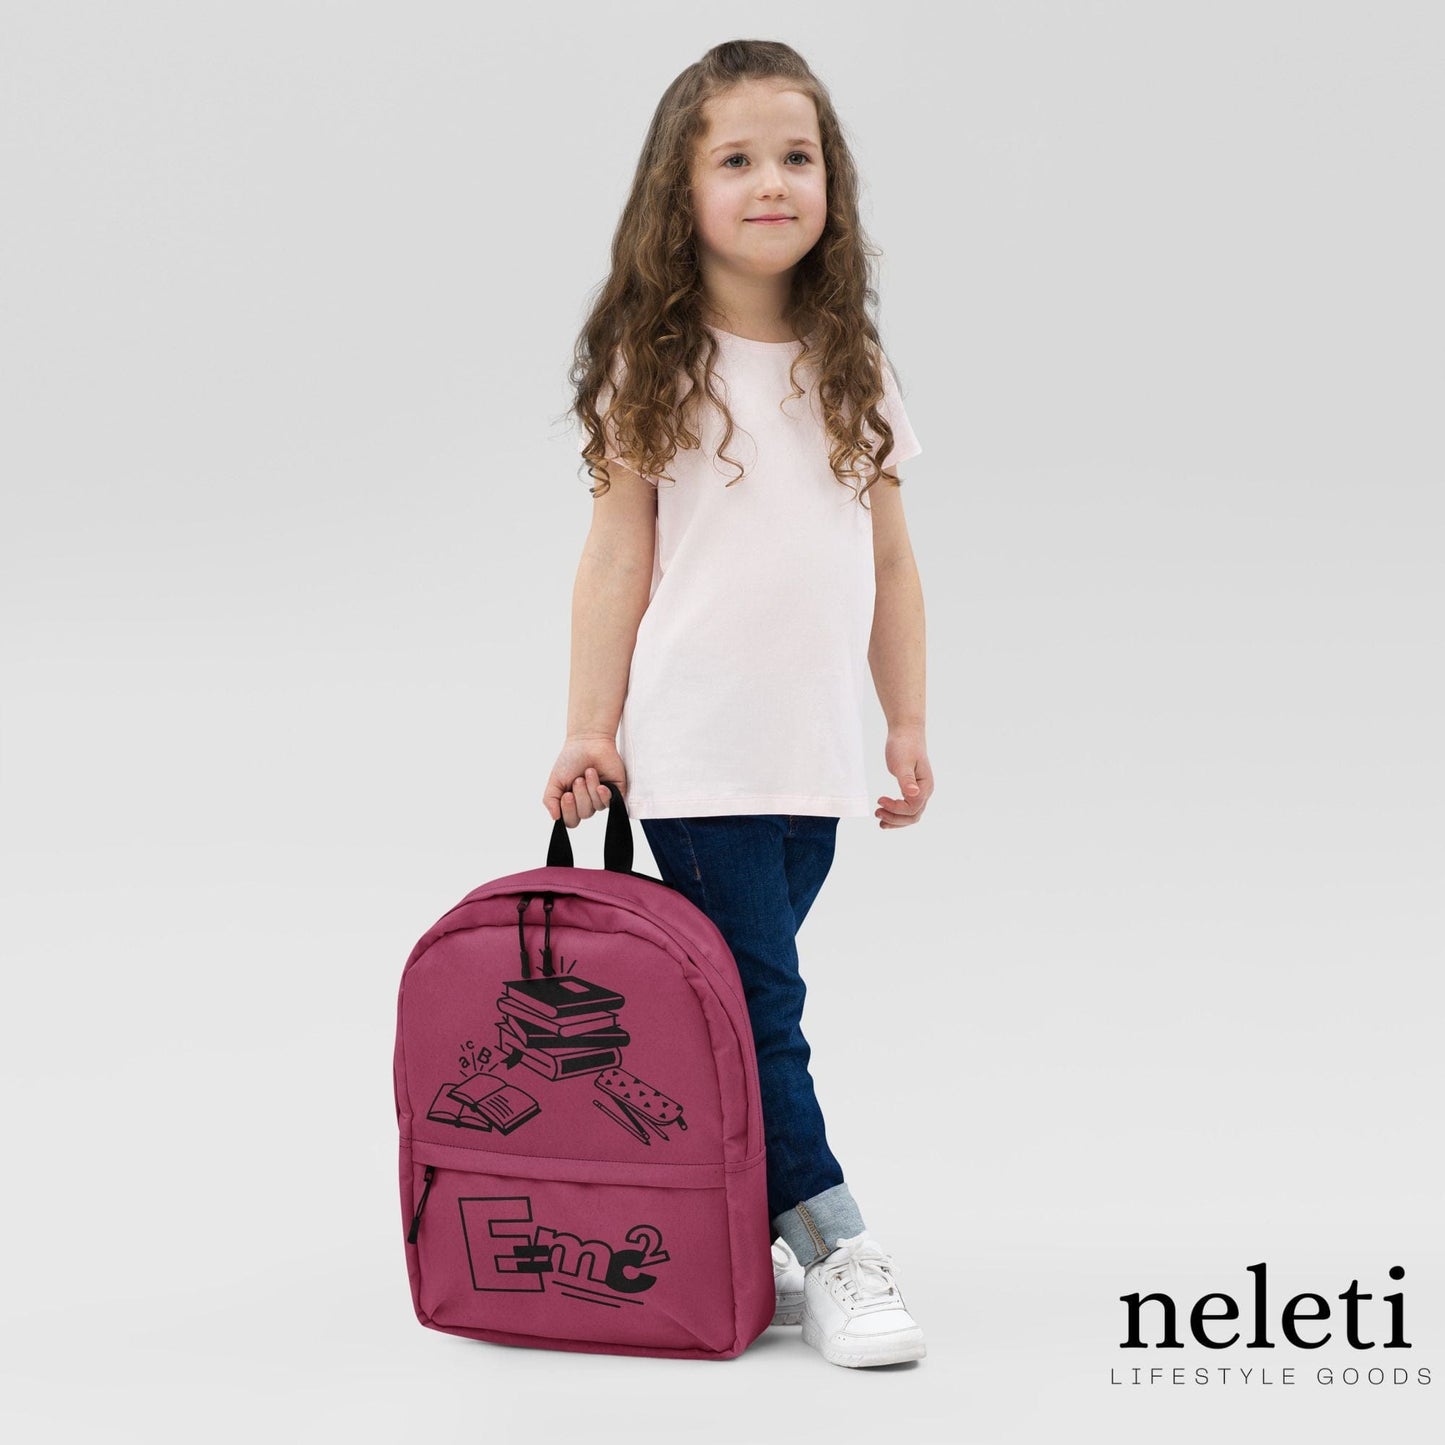 neleti.com-lipstik-backpacks-for-students